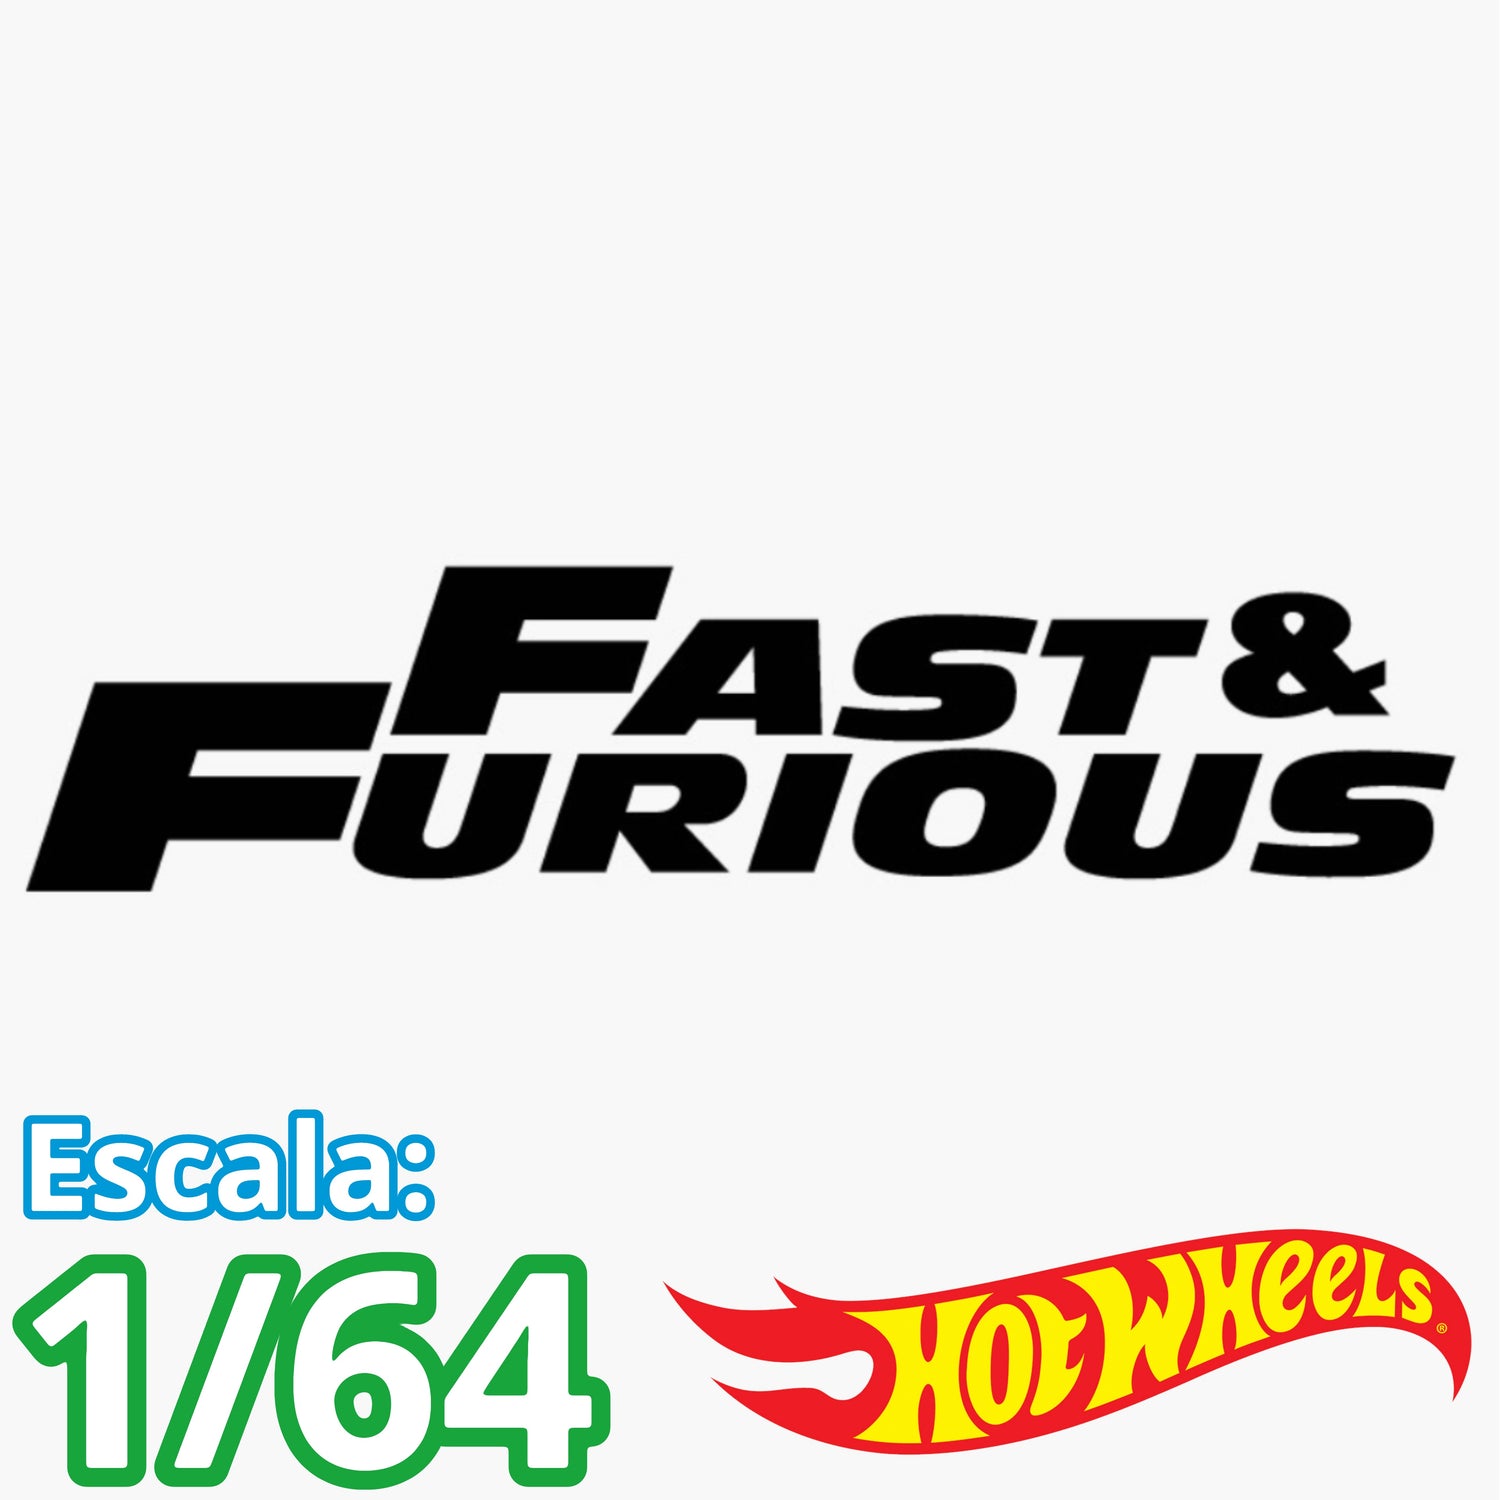 Fast & Furious hotwheels